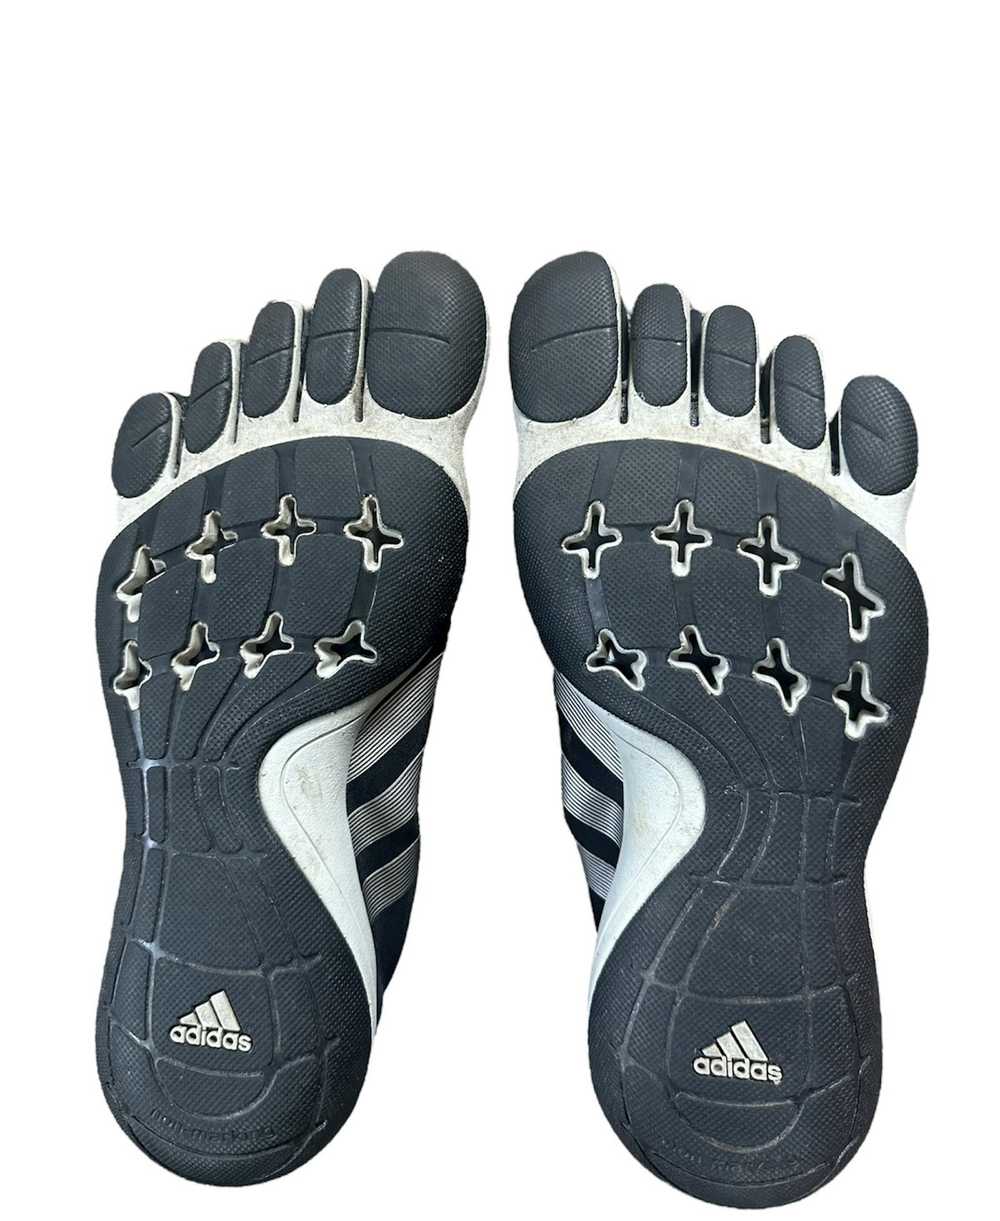 Adidas Adidas Adipure foot running toe shoe - image 1